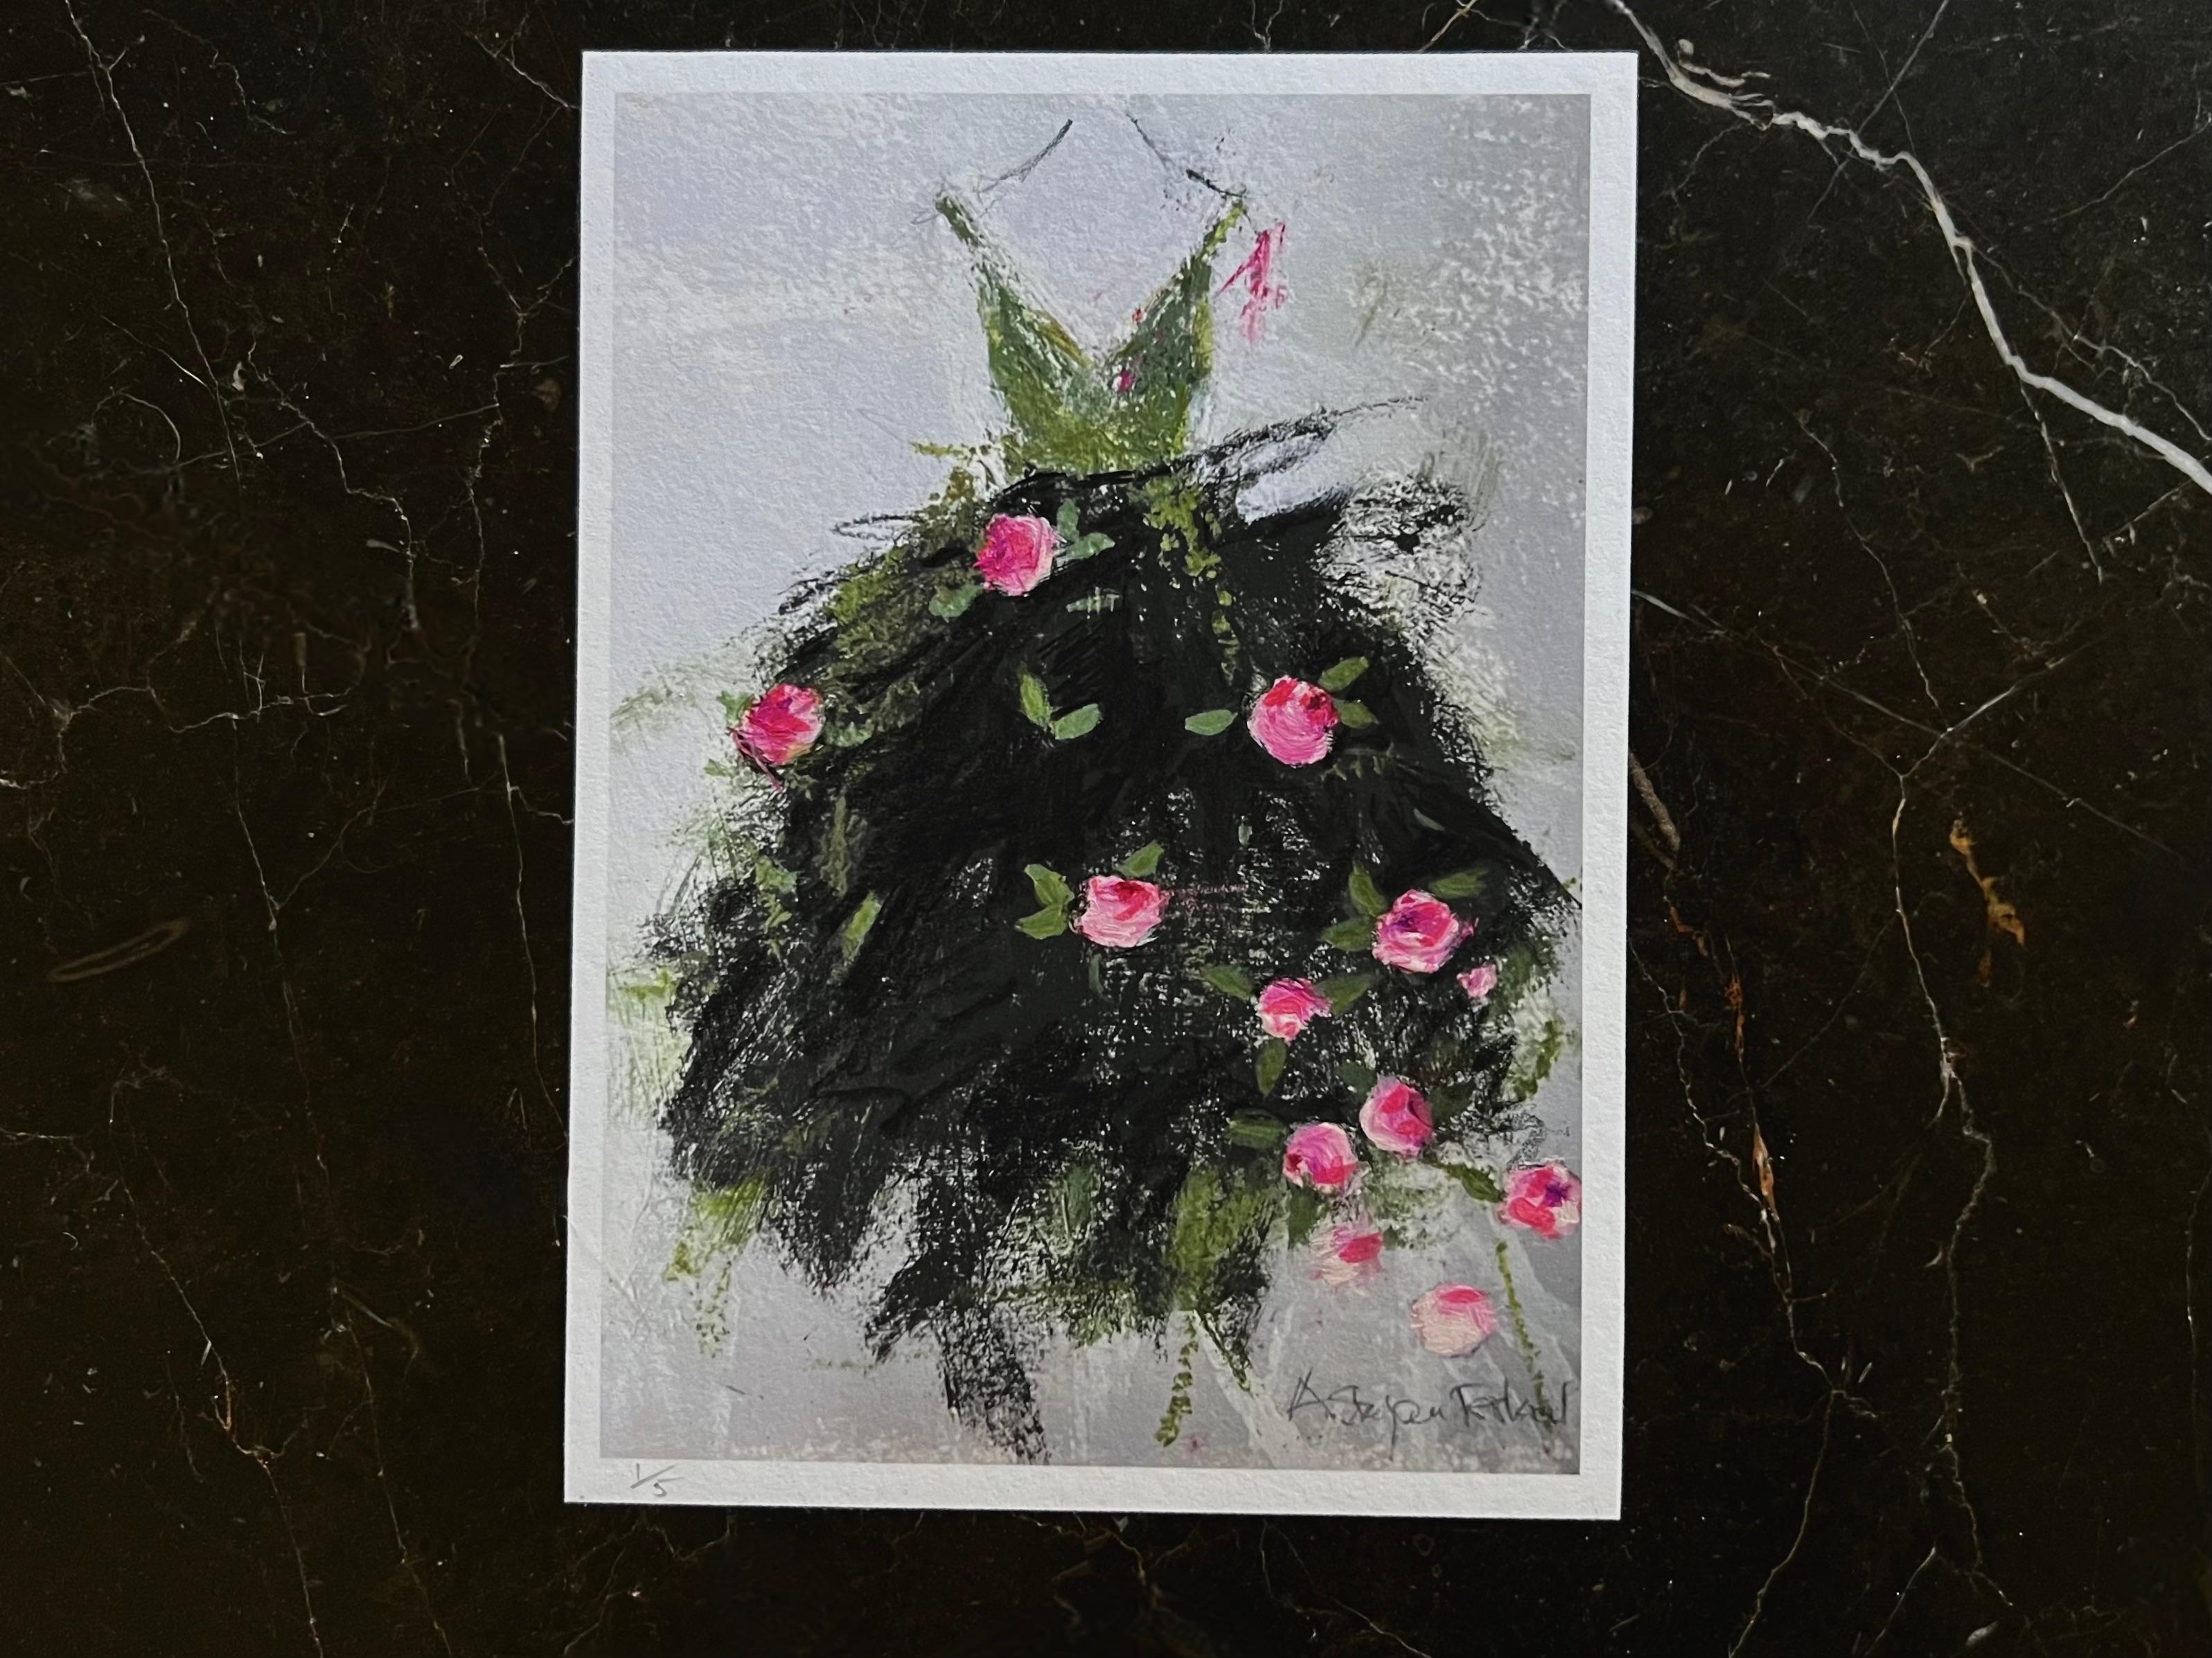 Andrea Stajan-Ferkul Figurative Print - Garden Party - 5"x7", Giclée Print w/ Hand Painted Elements, Green, Pink, Black